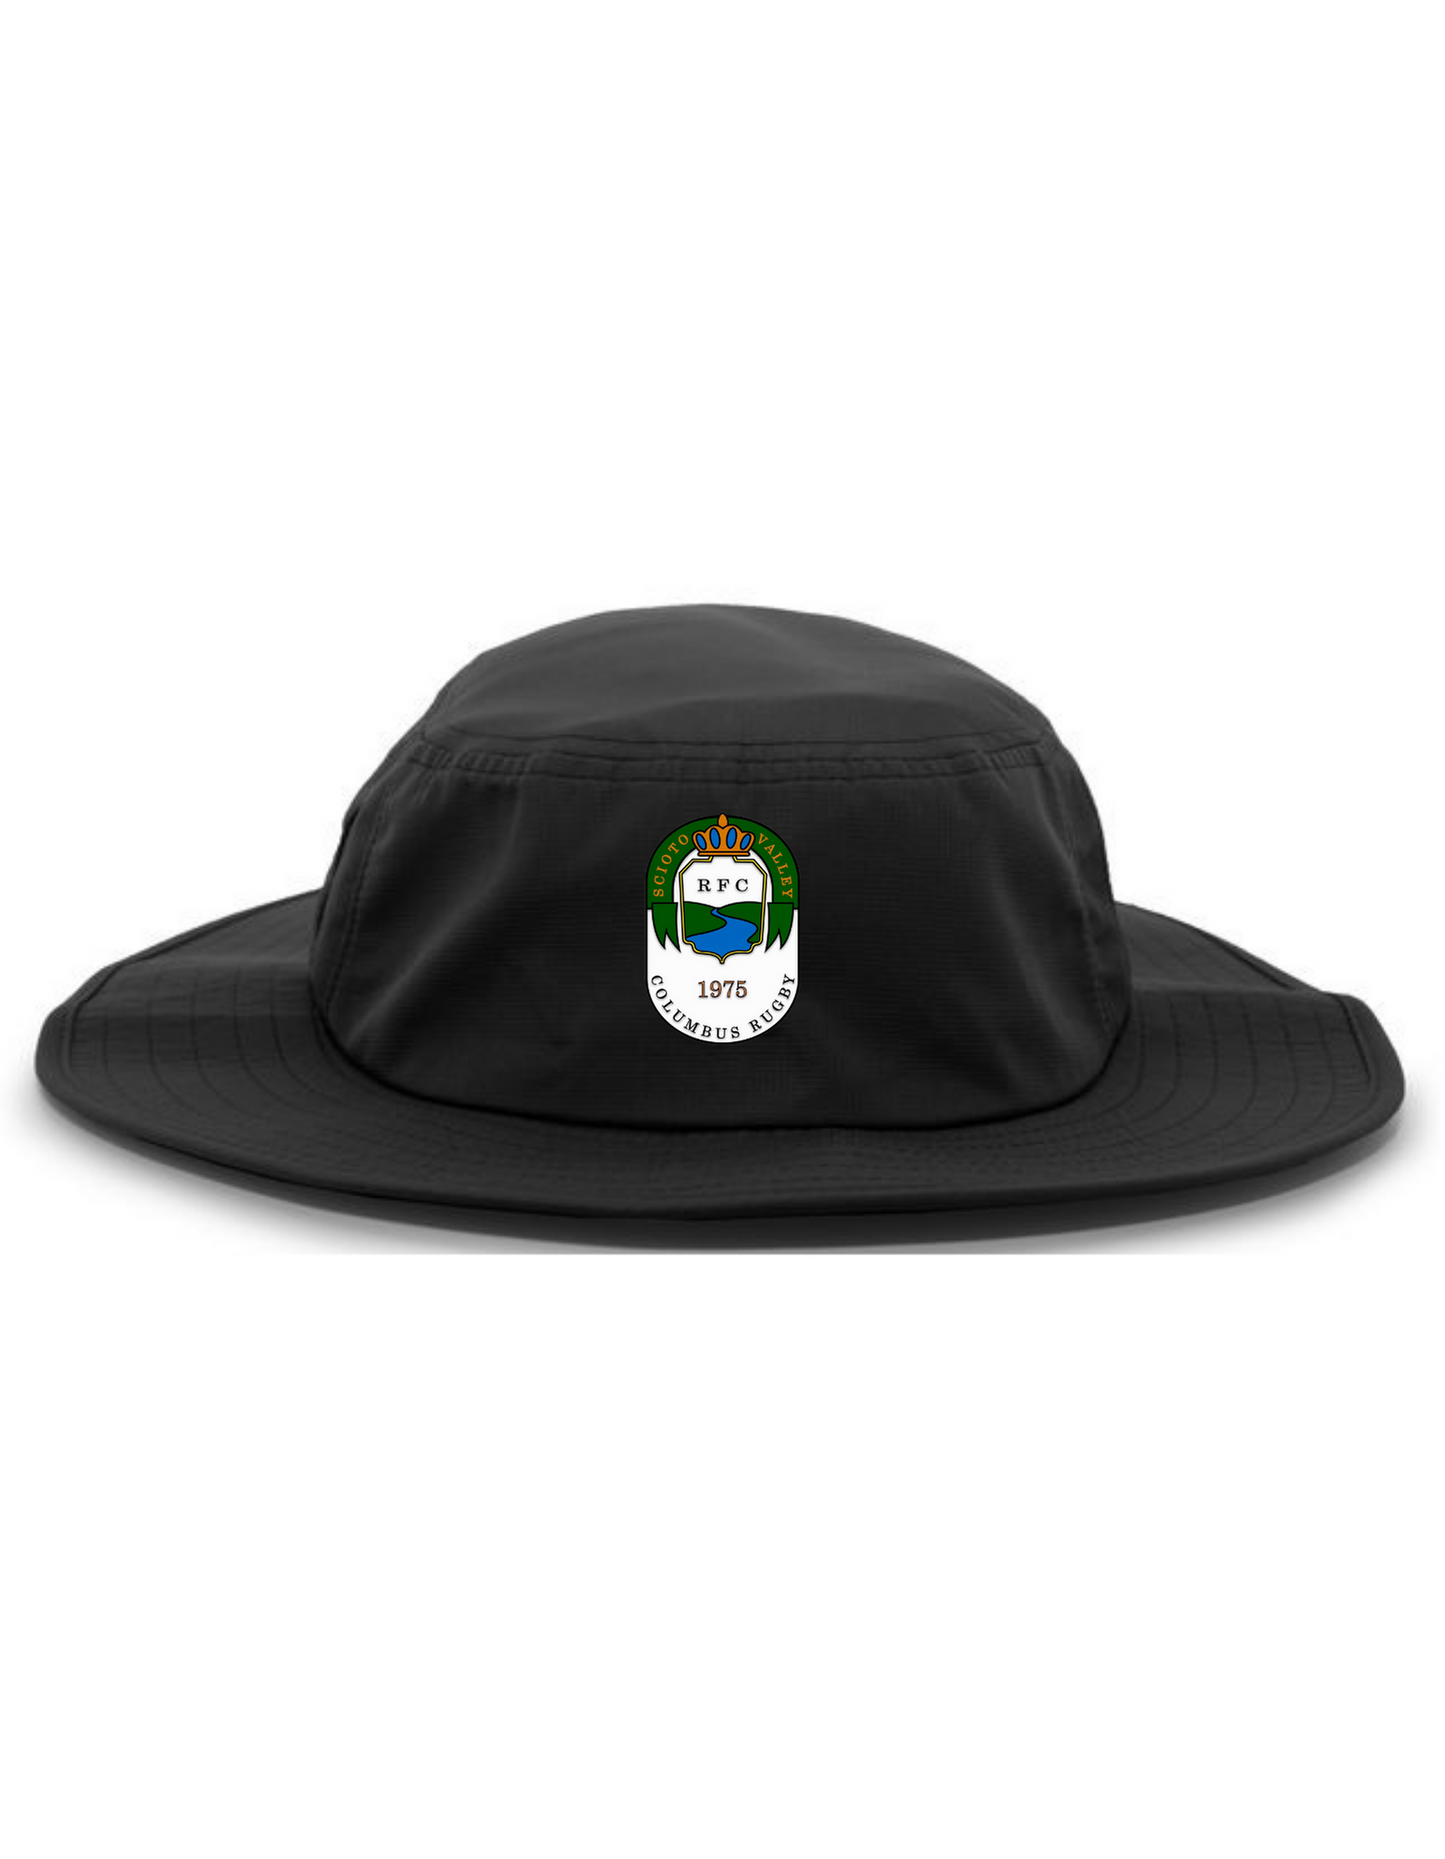 PACIFIC HEADWEAR Manta Ray Boonie Hat